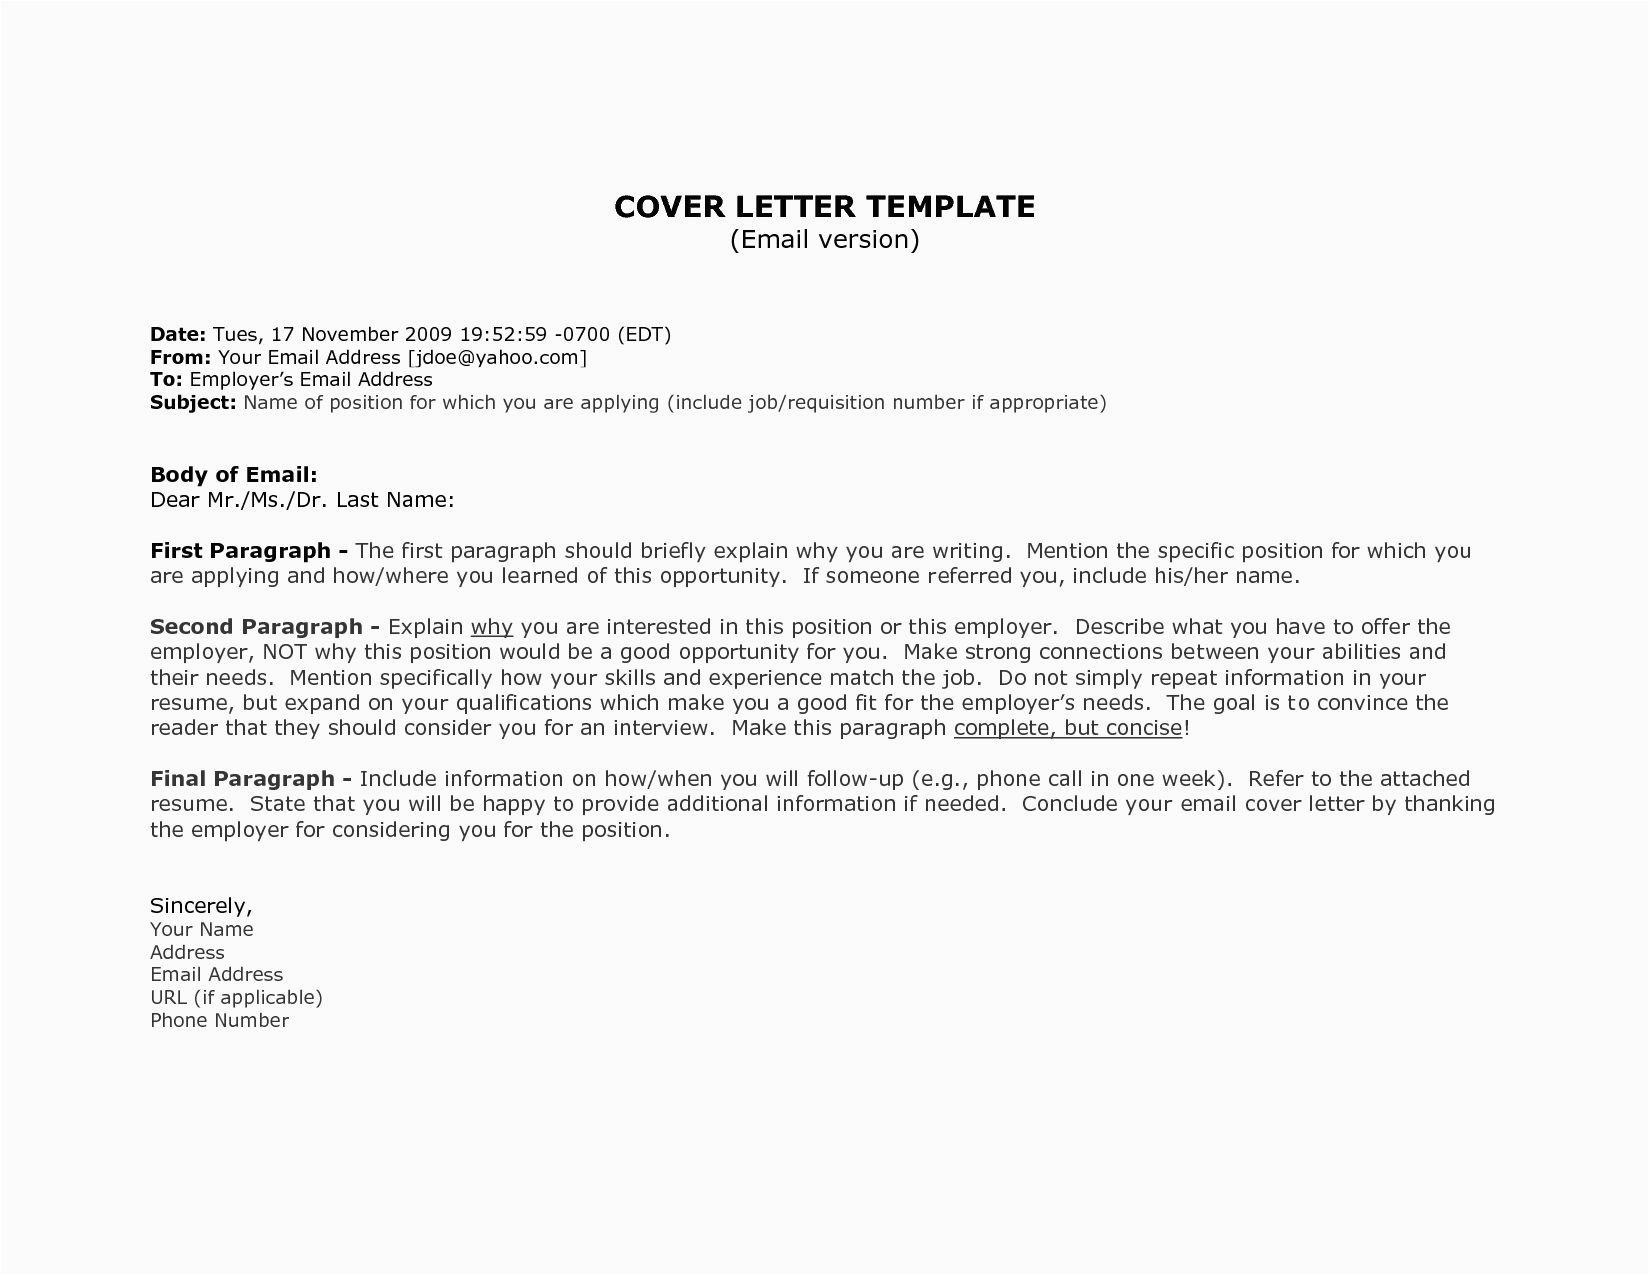 Resume Cover Letter Samples for First Job 1st Job Cover Letter Template Resume format